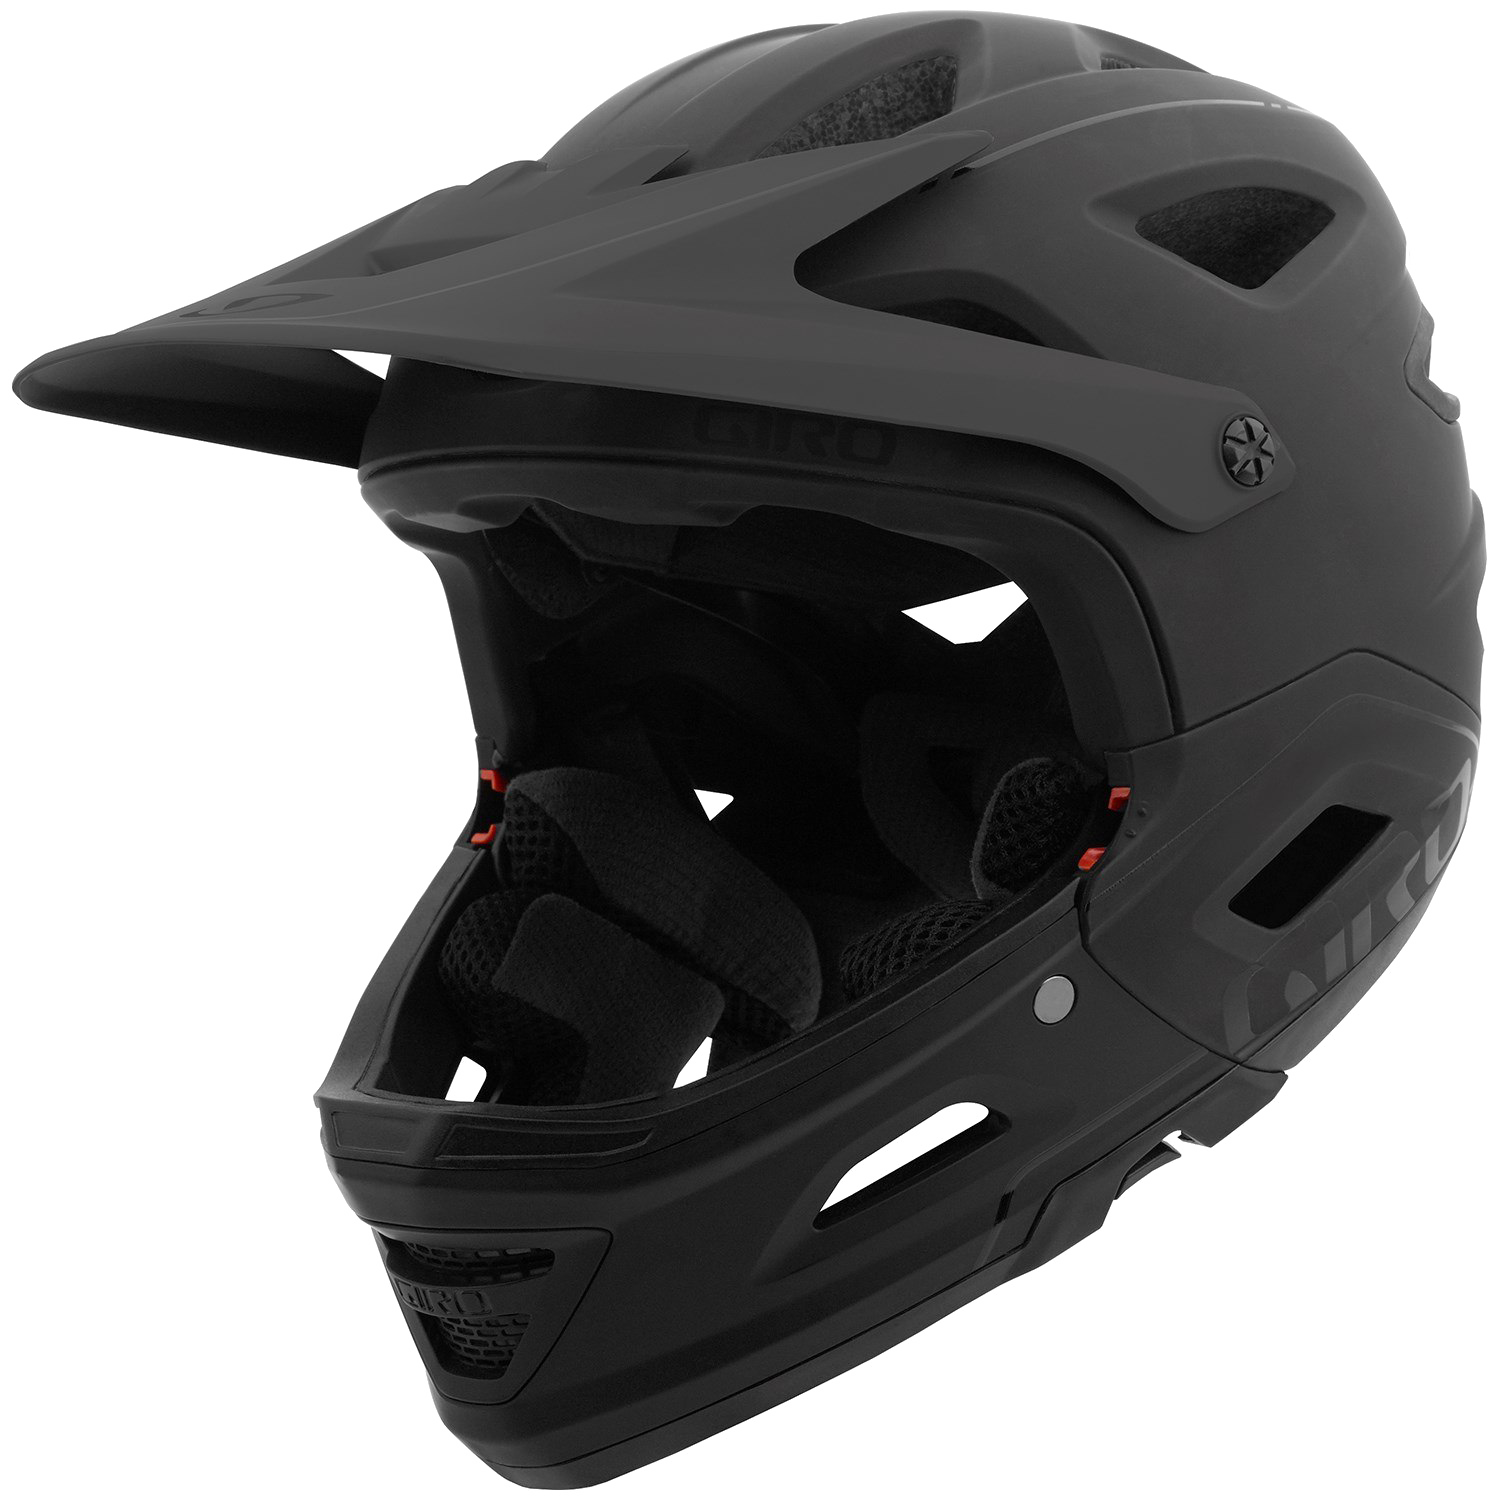 Bike Helmet PNG Background Image